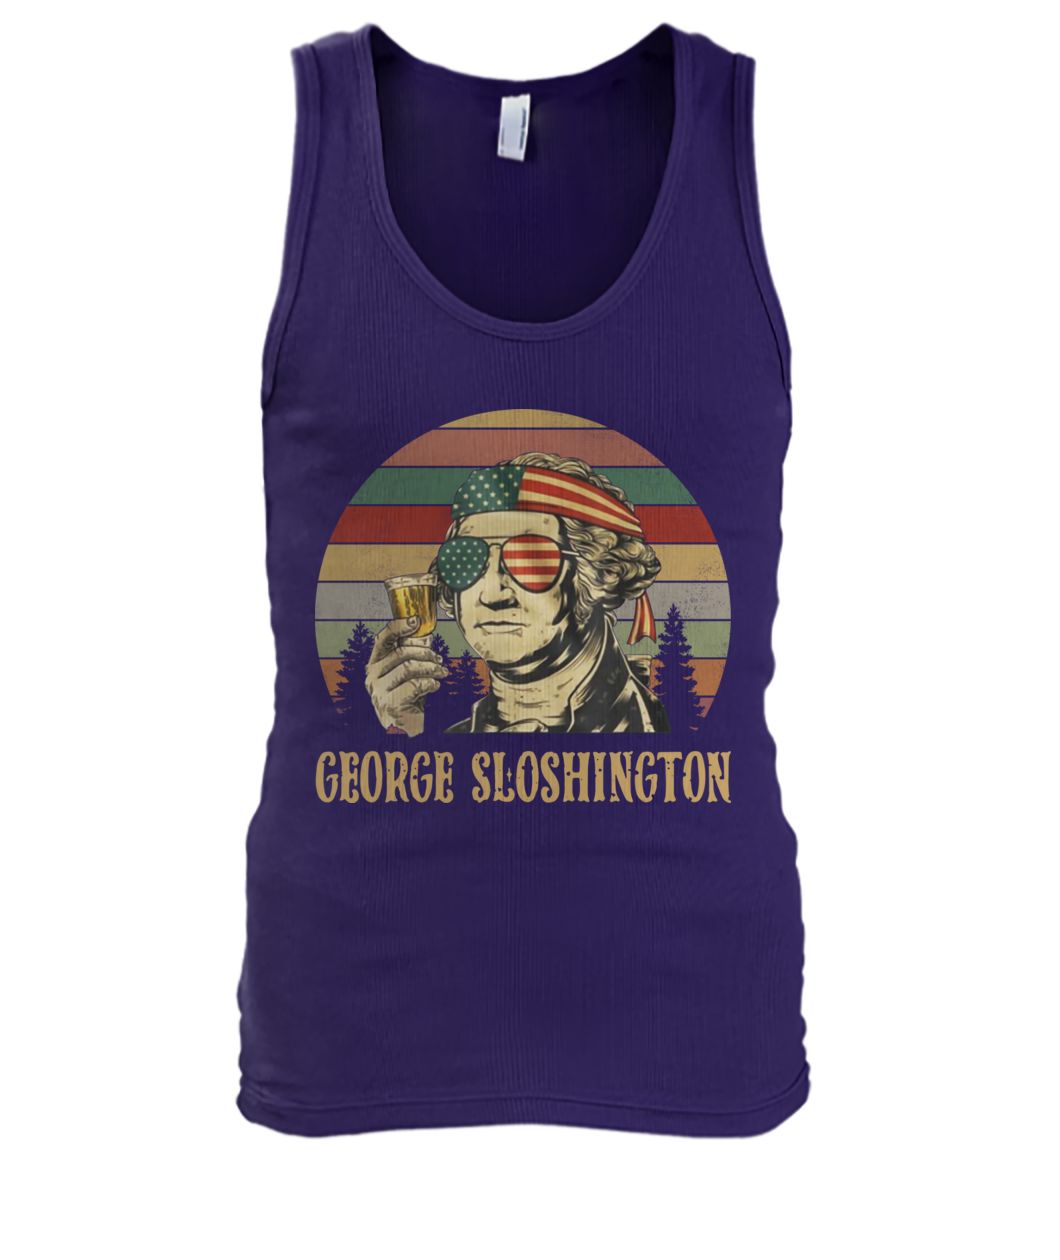 George sloshington vintage men's tank top